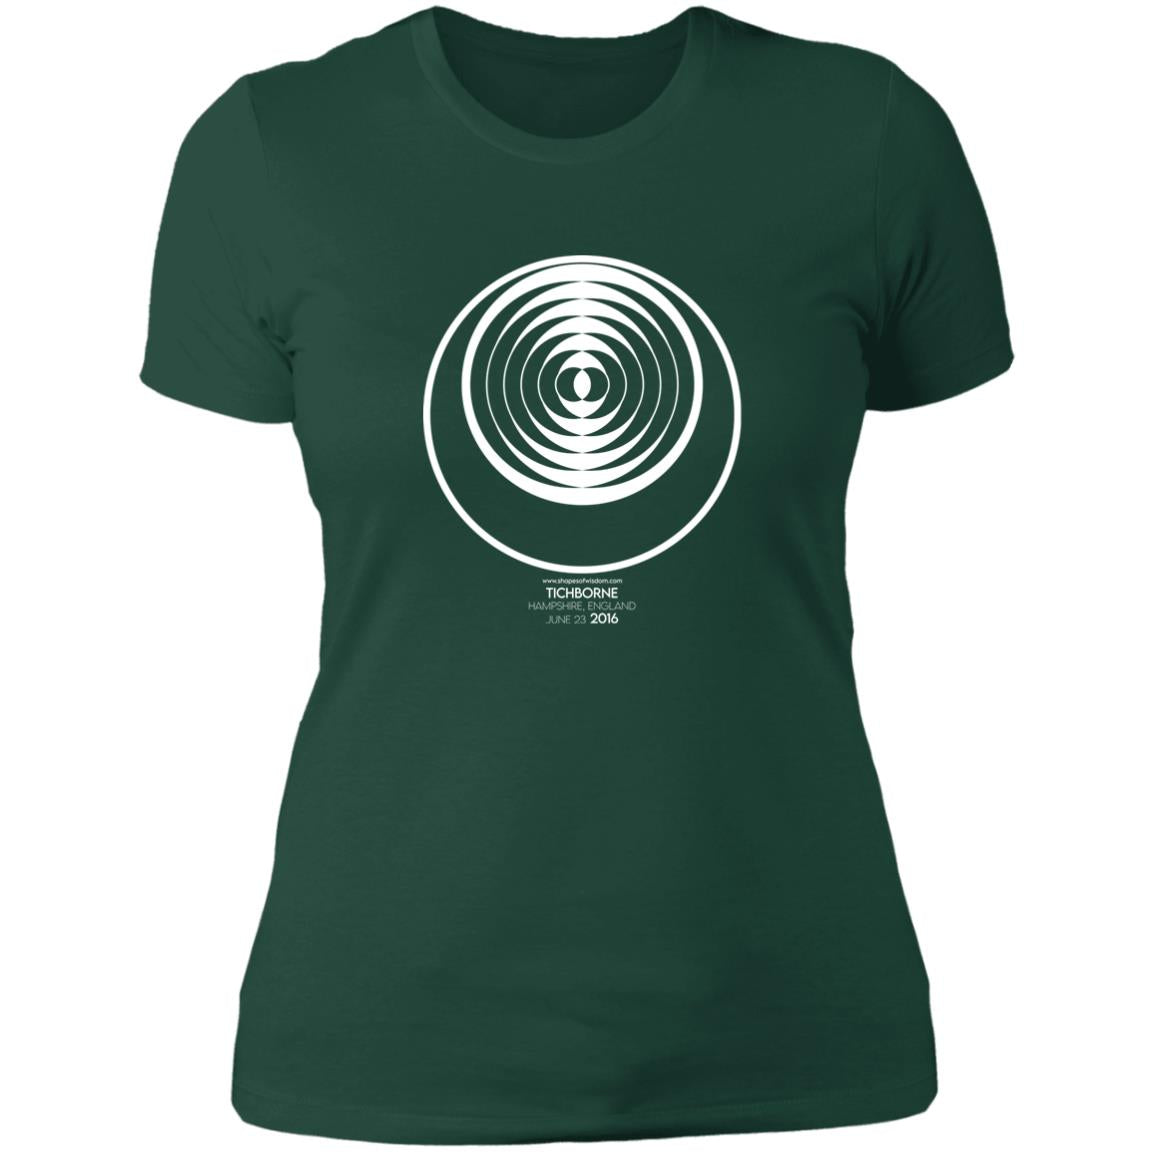 Crop Circle Basic T-Shirt - Tichborne 2